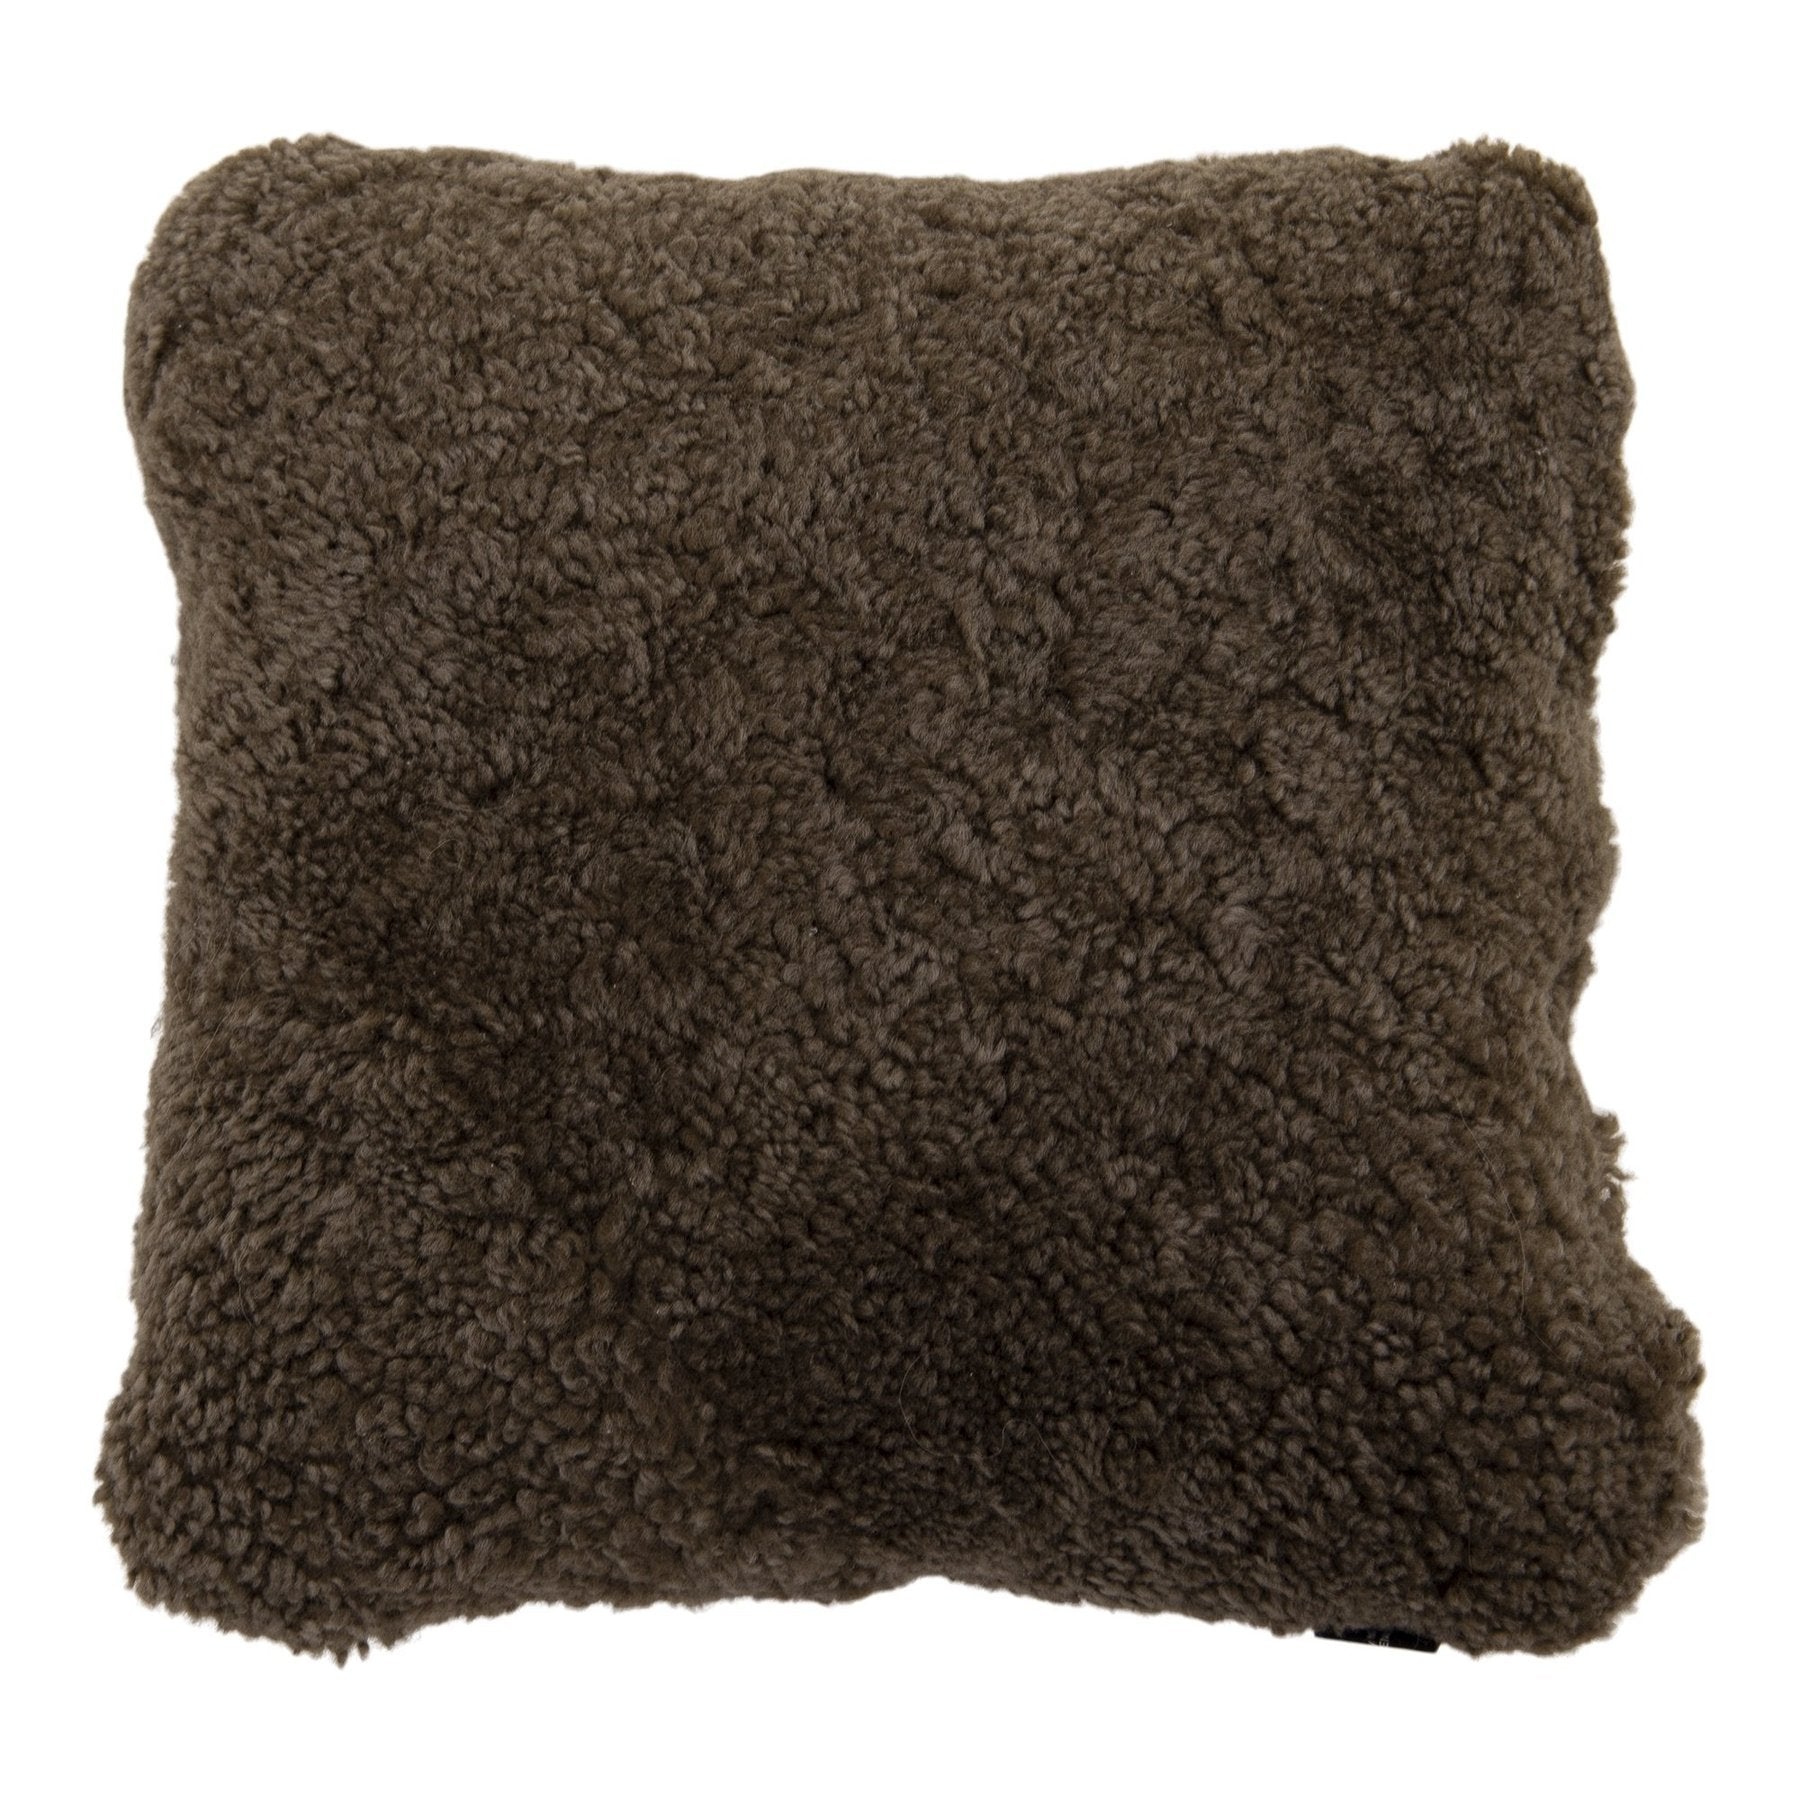 Premium Quality, New Zealand, Double sided Cushion, SW Curly Size: 40x40 cm